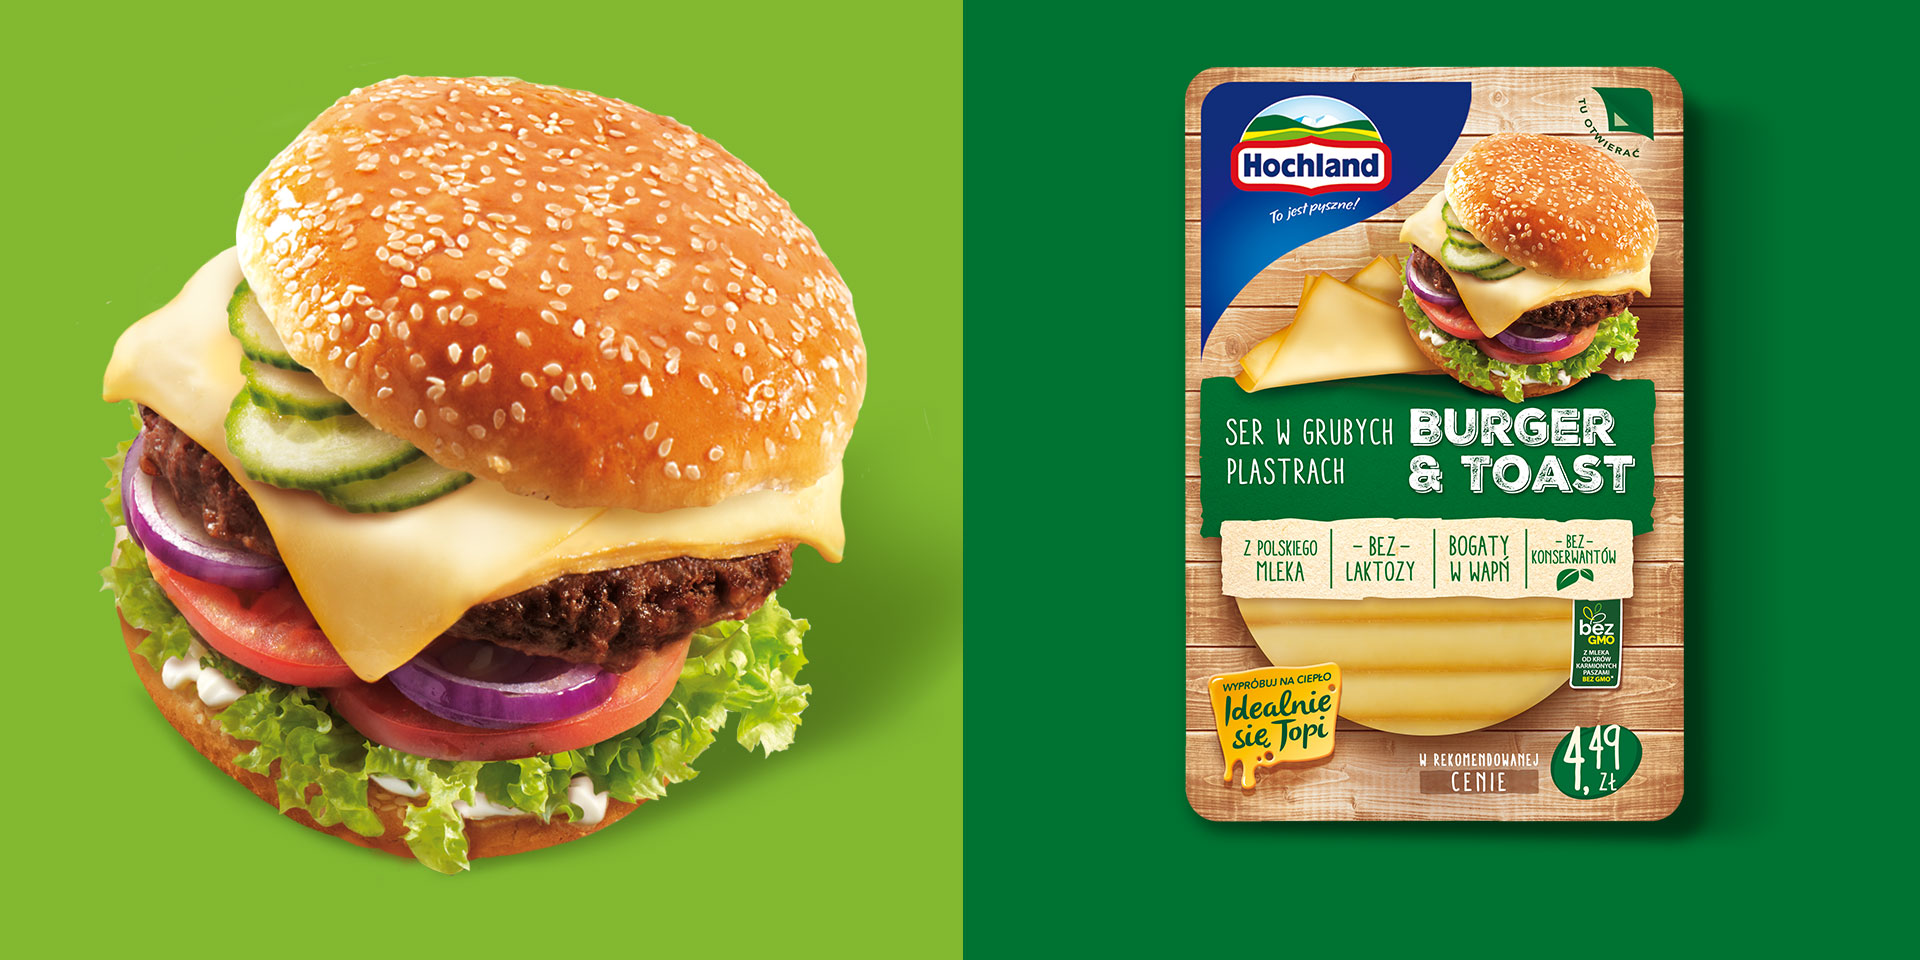 Nowość Hochland - ser w grubych plastrach burger & toast